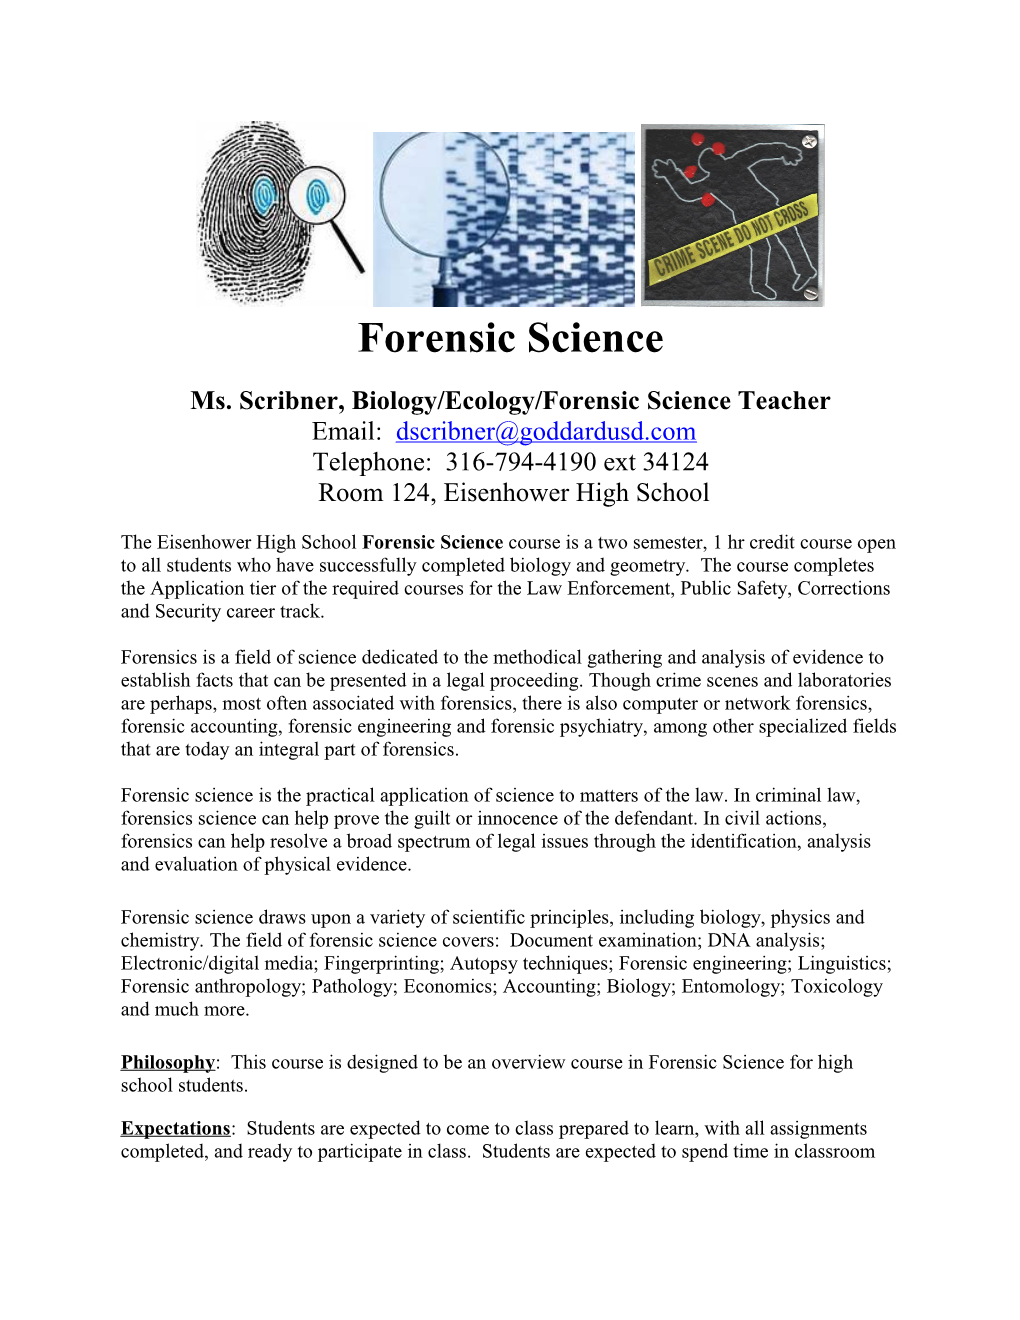 Ms. Scribner, Biology/Ecology/Forensic Science Teacher